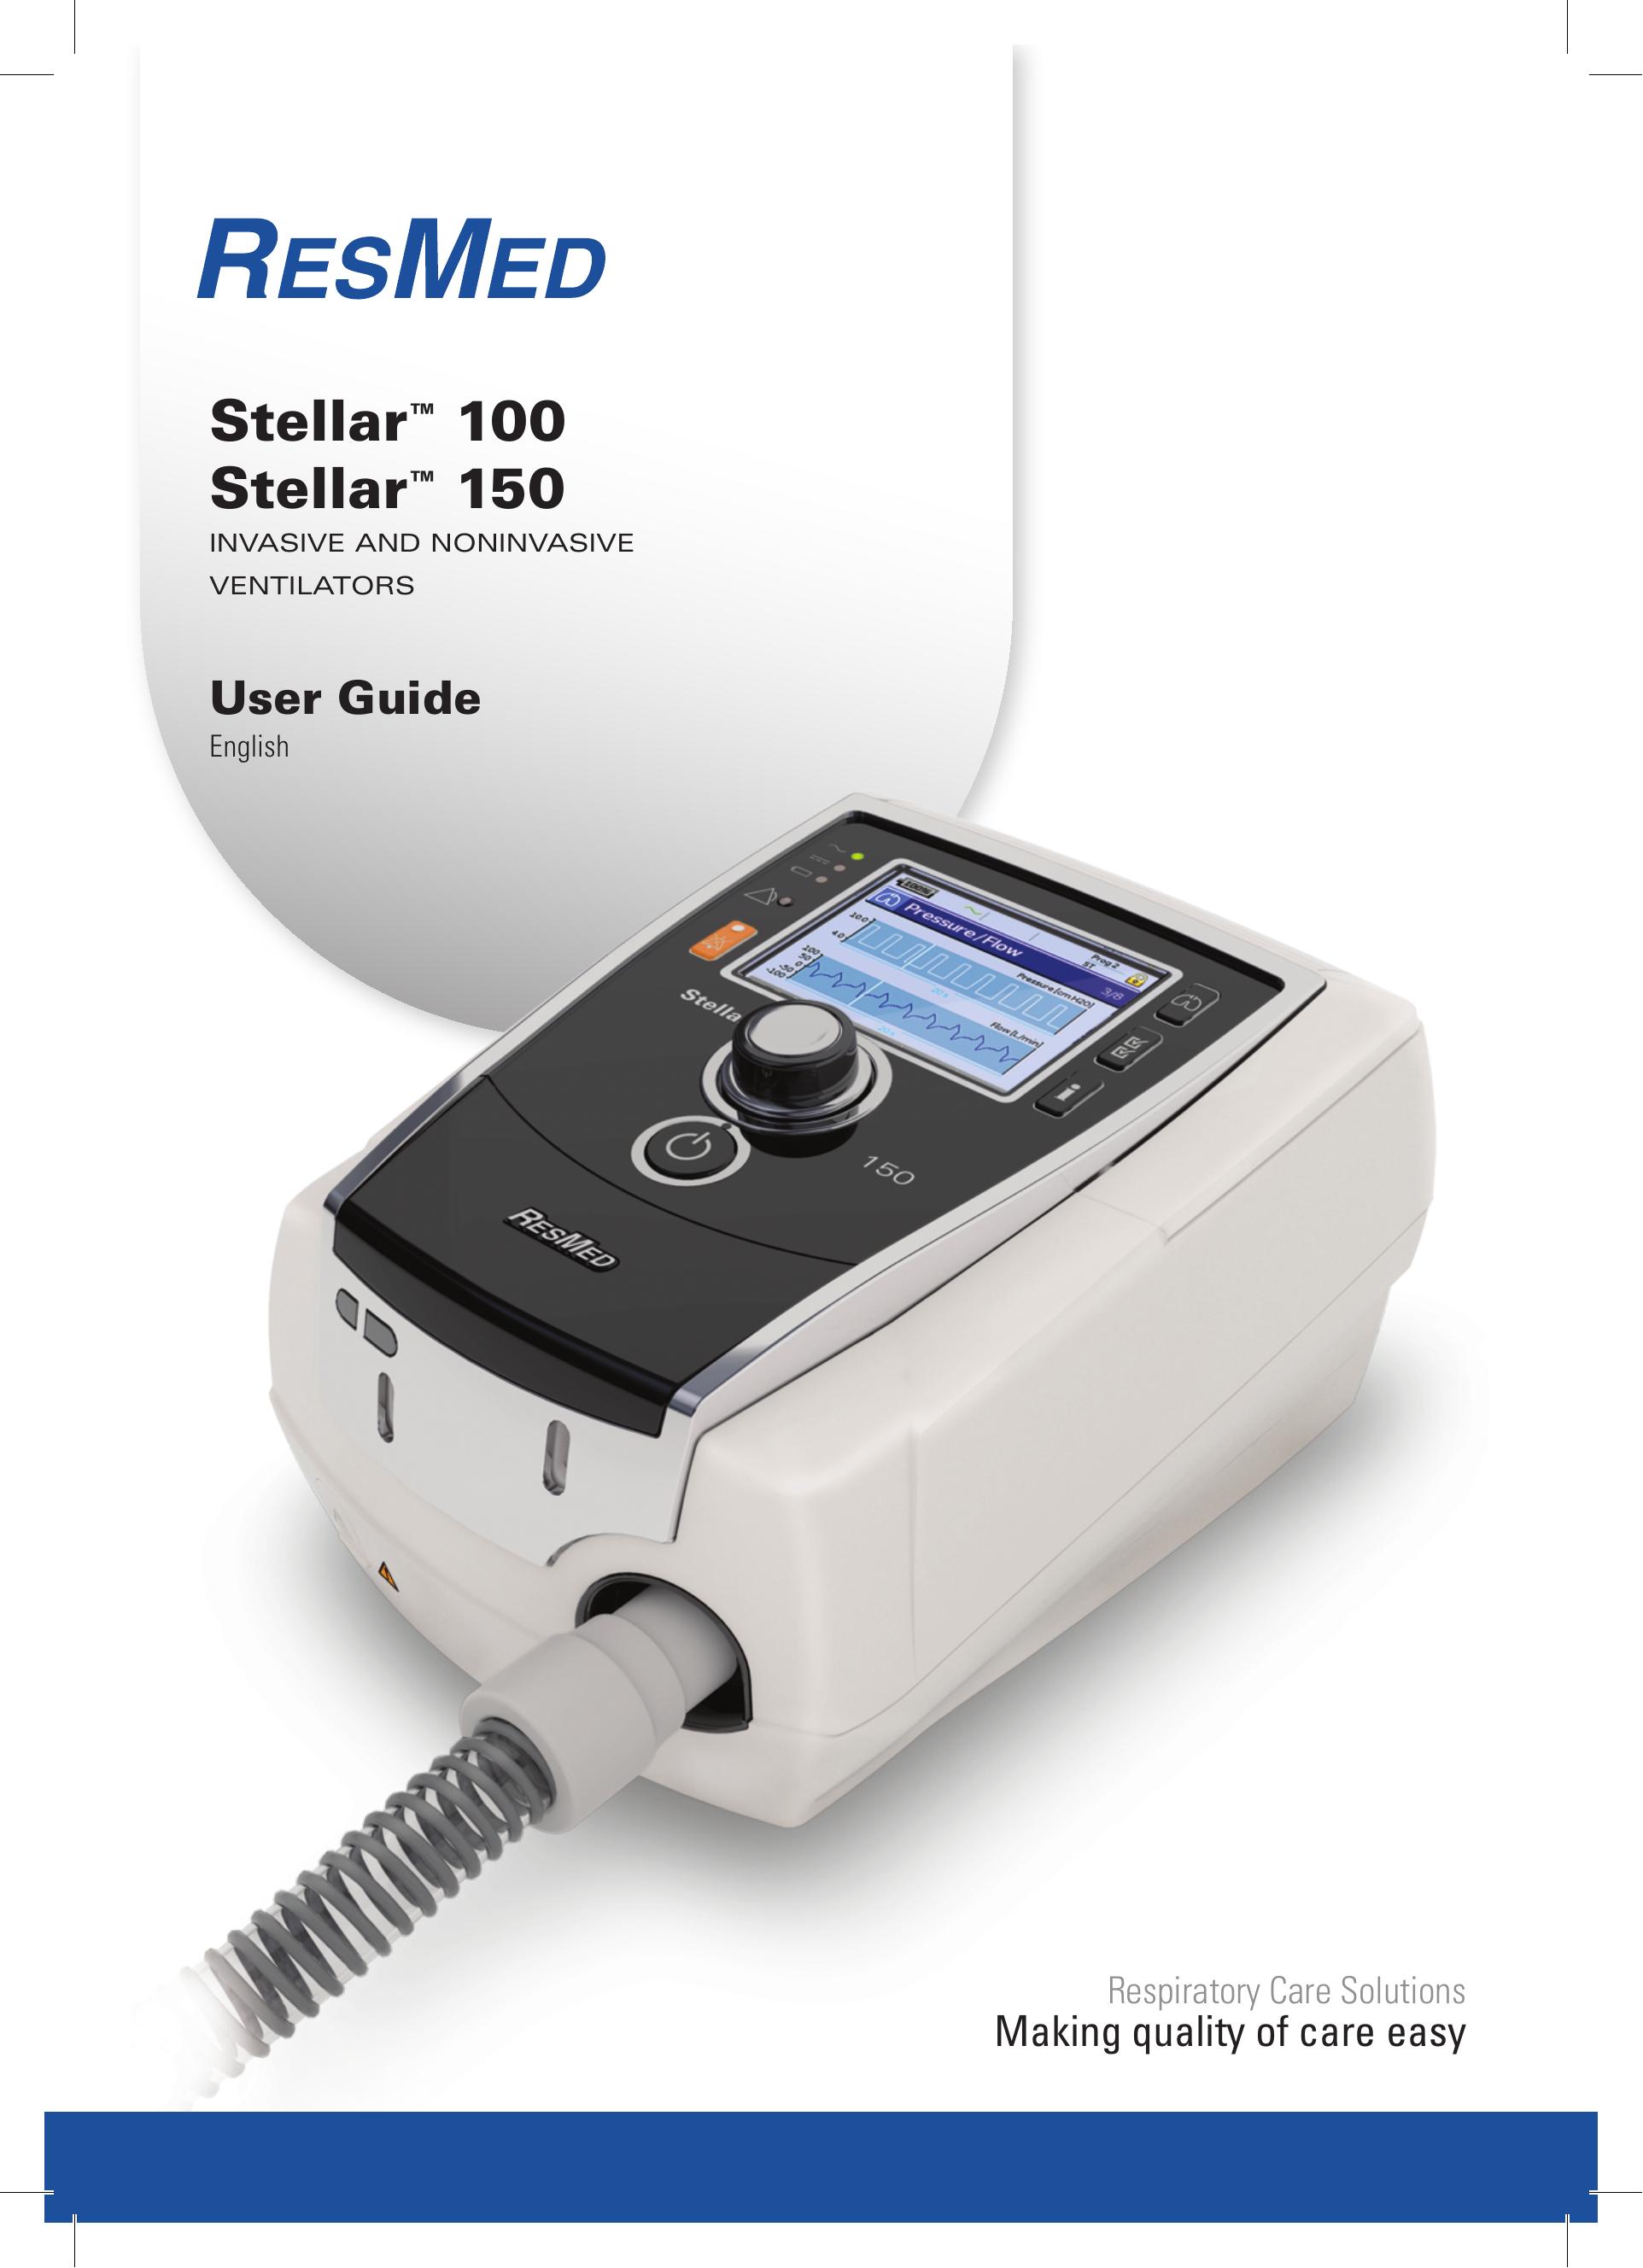 ResMed Stellar 100 and 150 Ventilation Hood User Manual